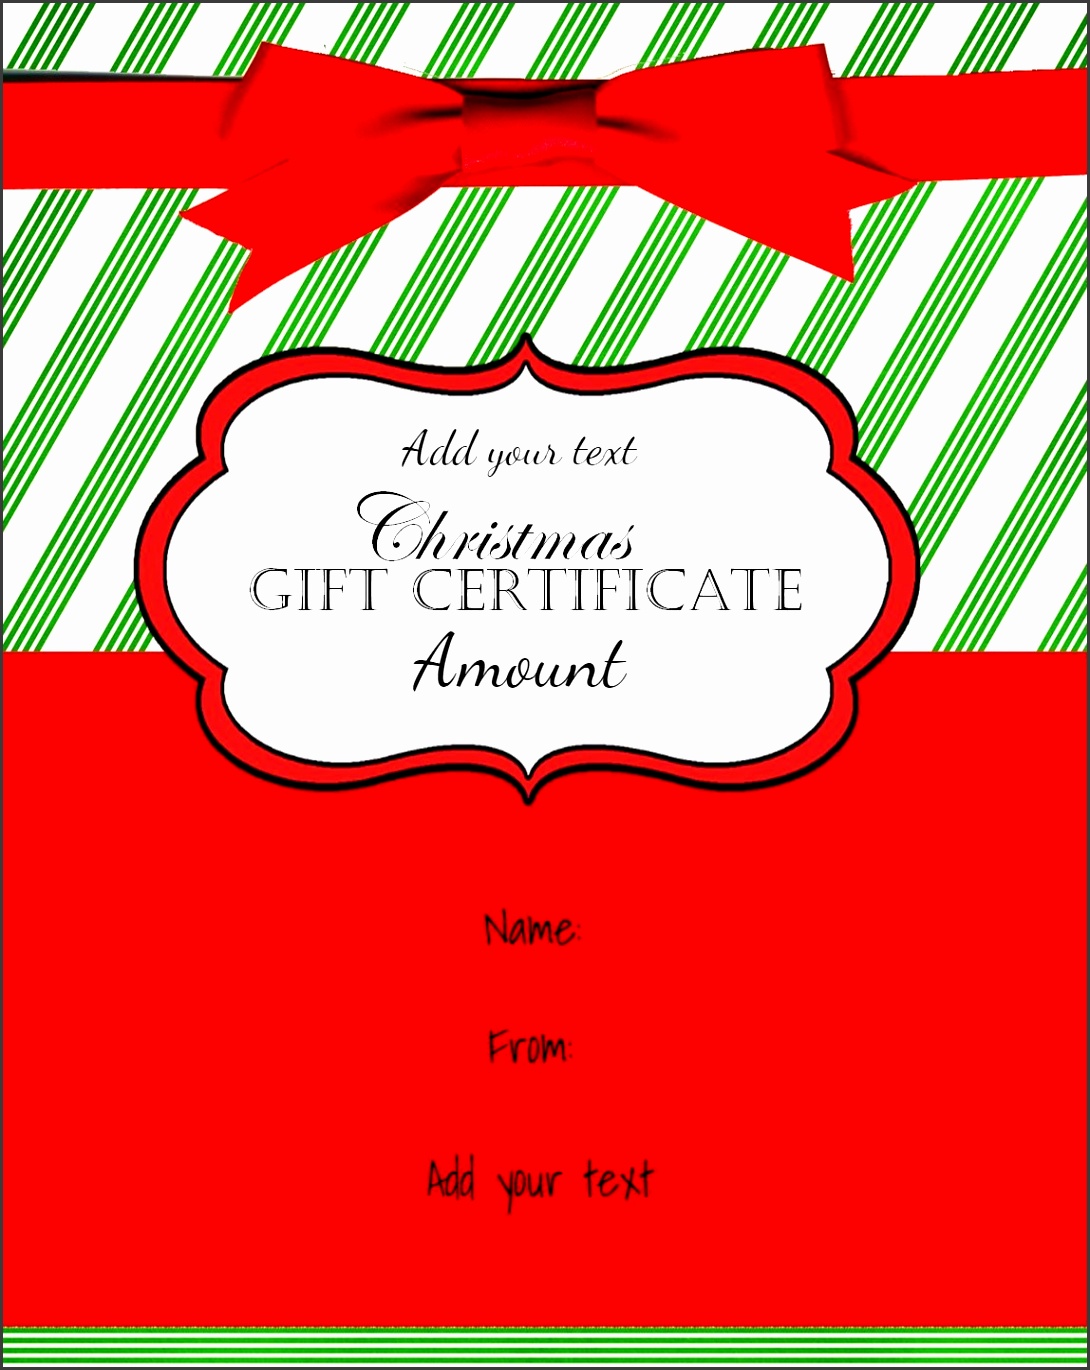 5 Christmas Gift Voucher Template Free Download - SampleTemplatess